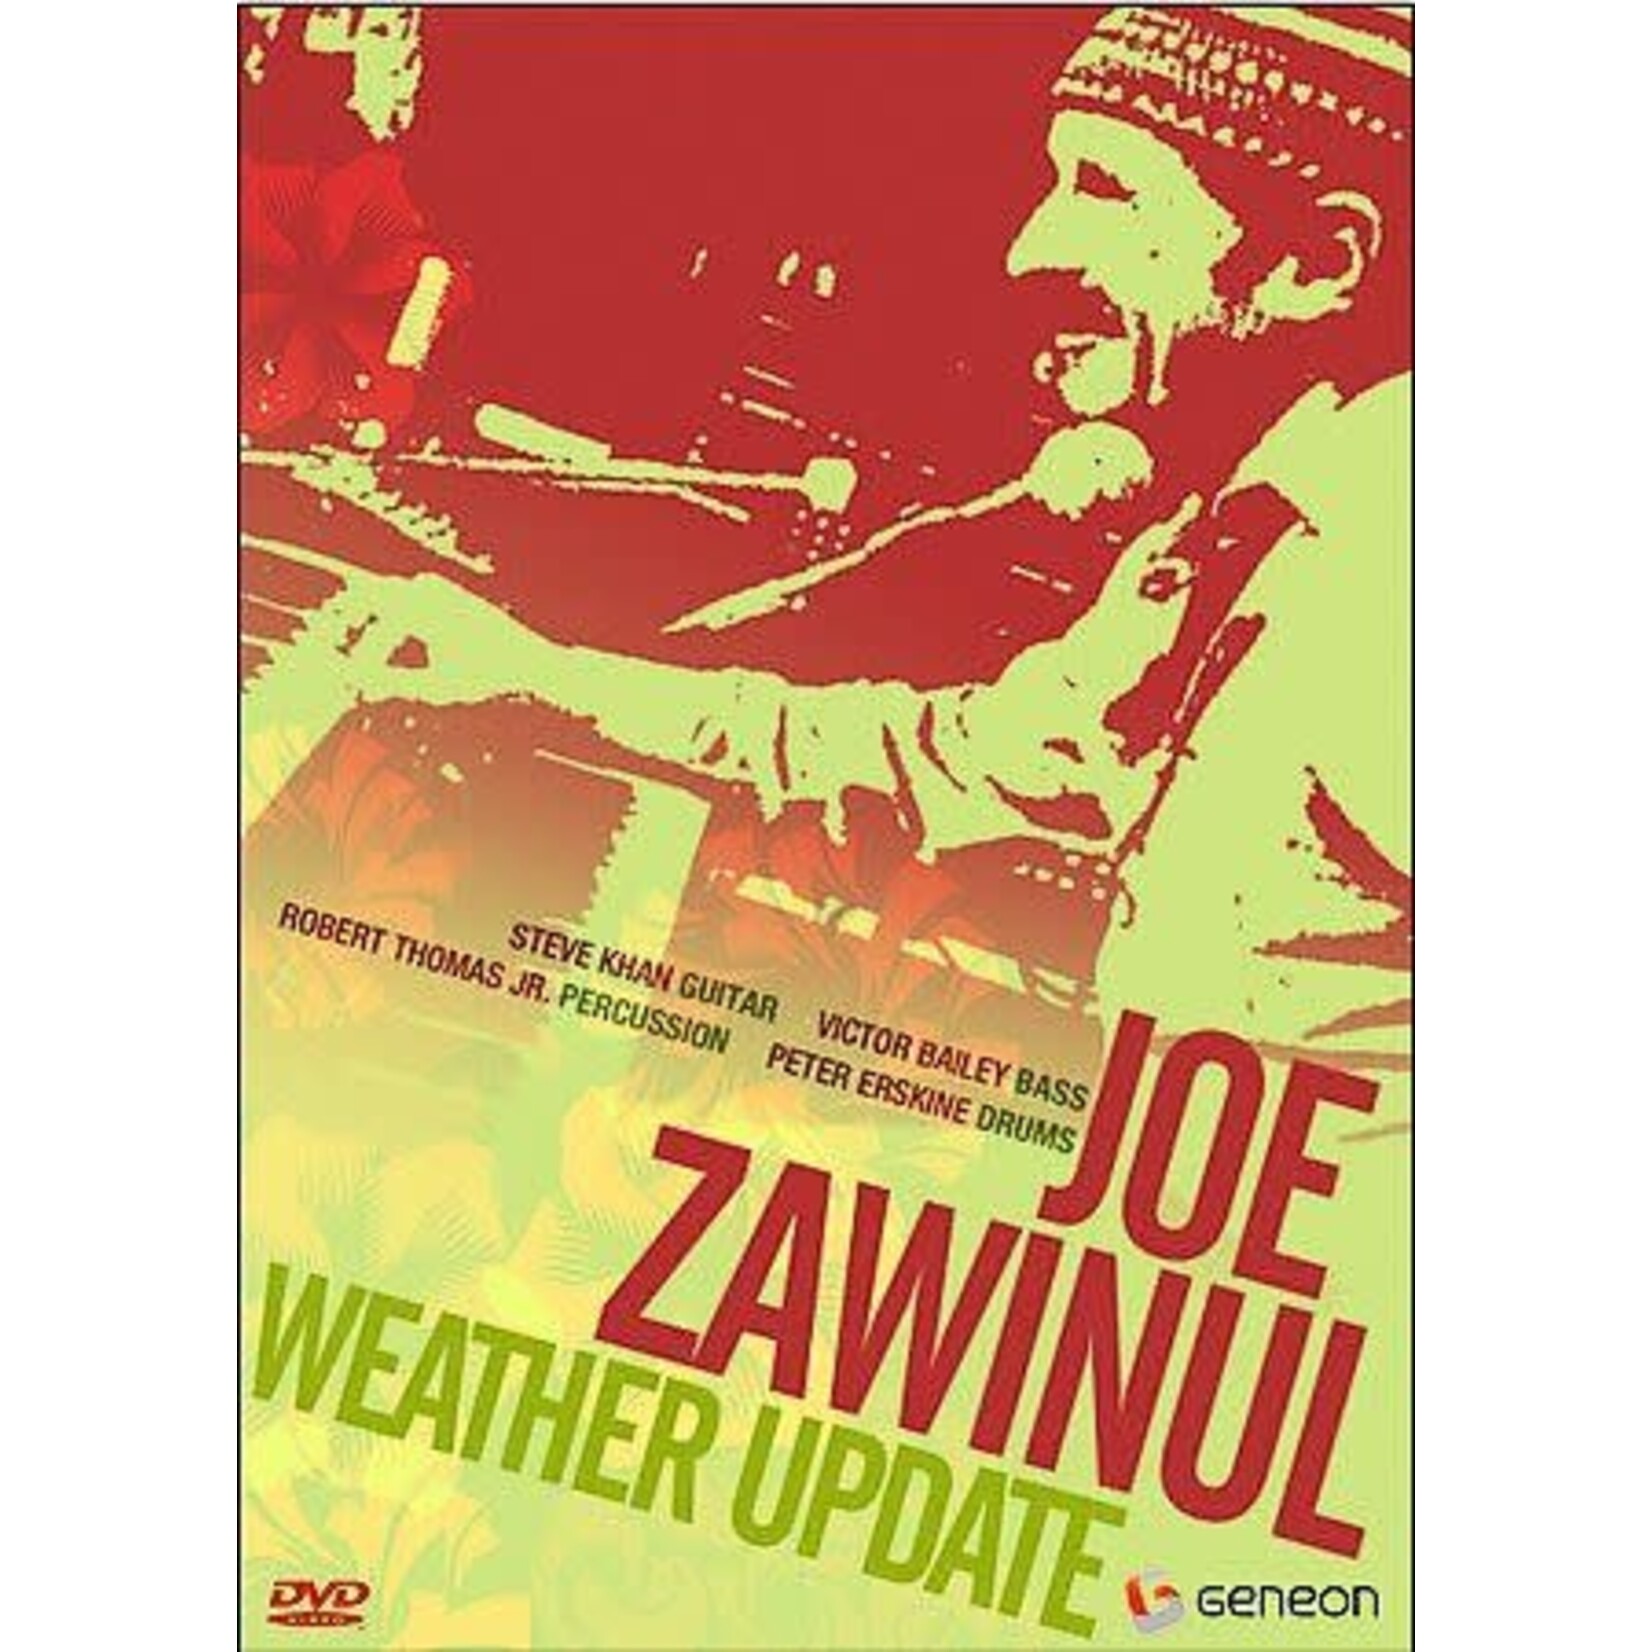 Joe Zawinul - Joe Zawinul And Weather Update [USED DVD]